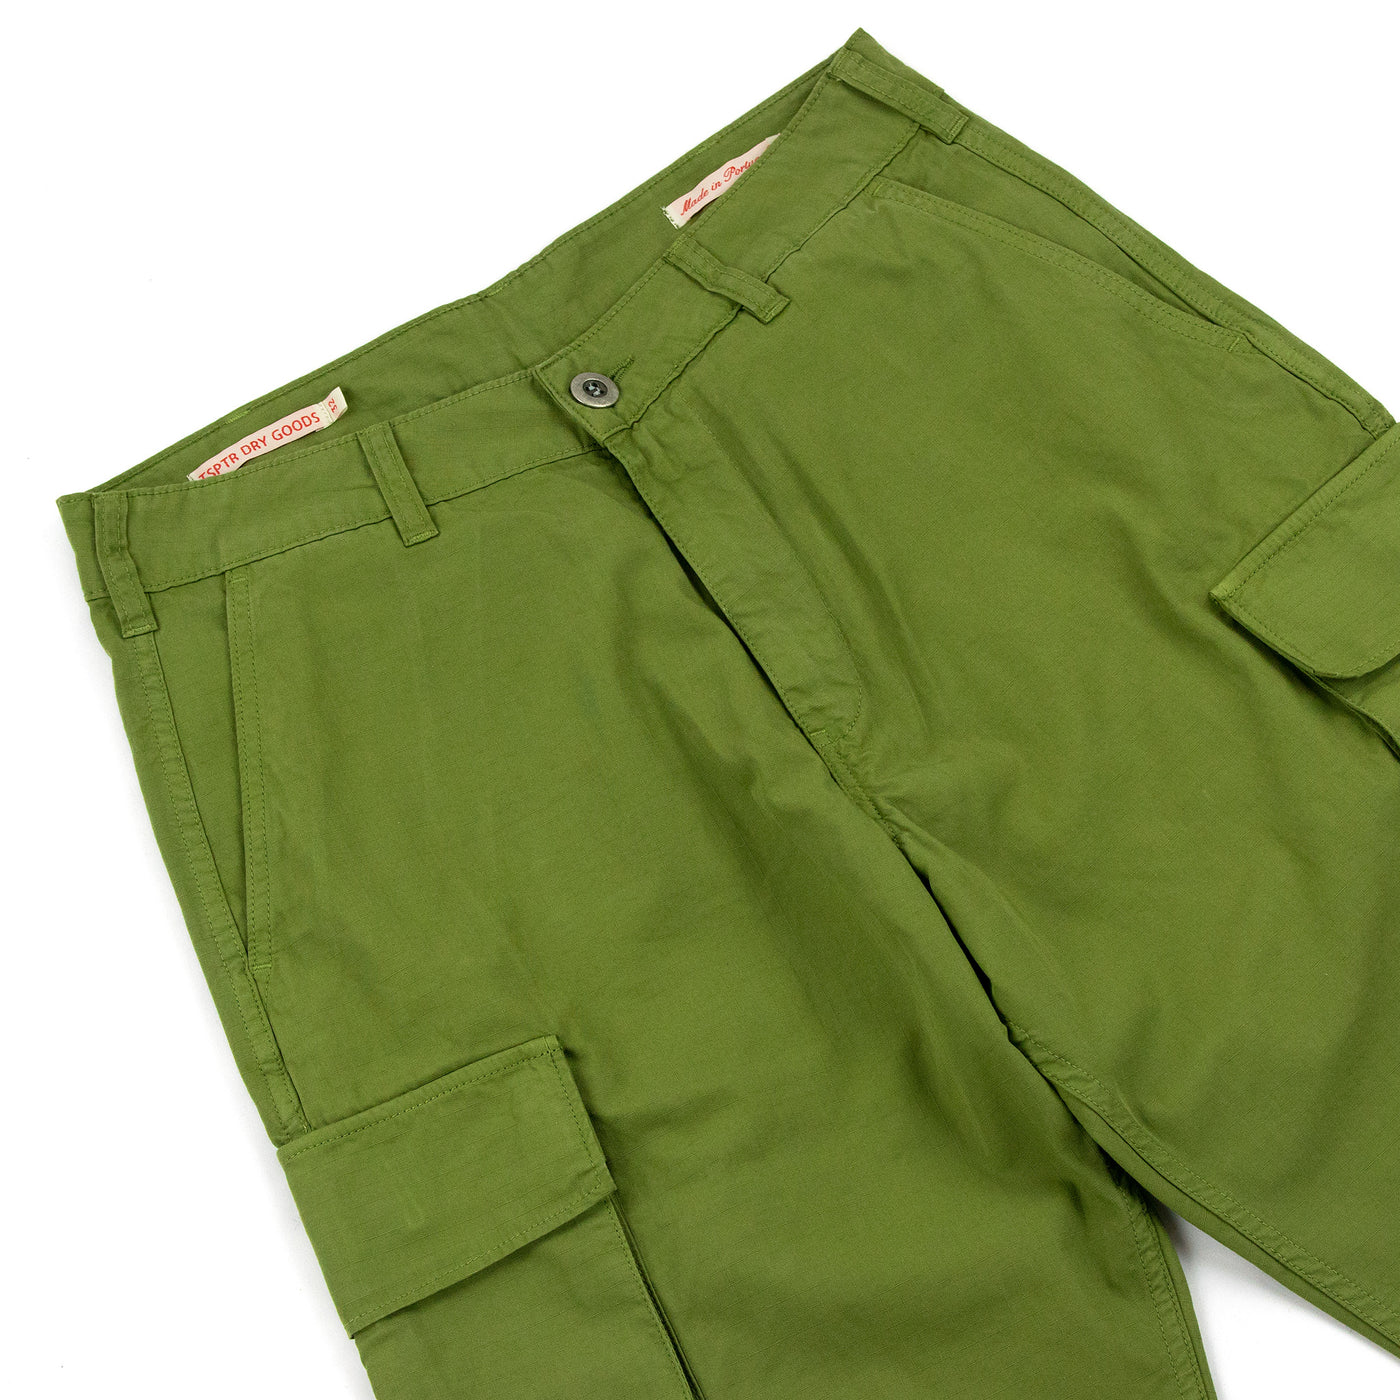 TSPTR Jungle Pants Cotton Poplin Olive Drab Front